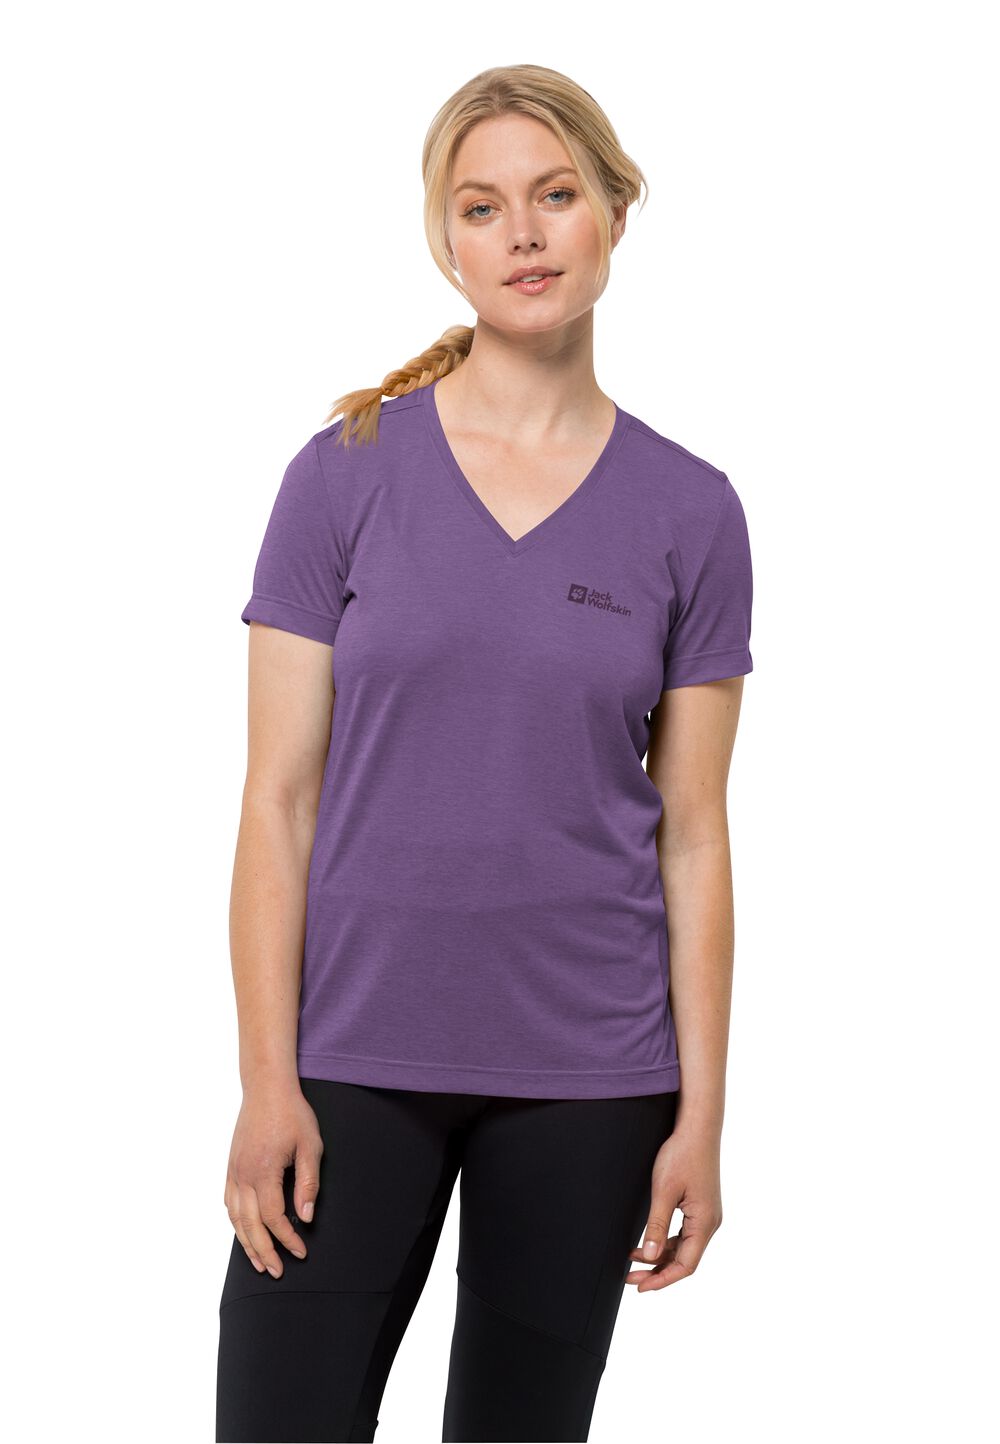 Jack Wolfskin Crosstrail T-Shirt Women Functioneel shirt Dames S ultraviolet